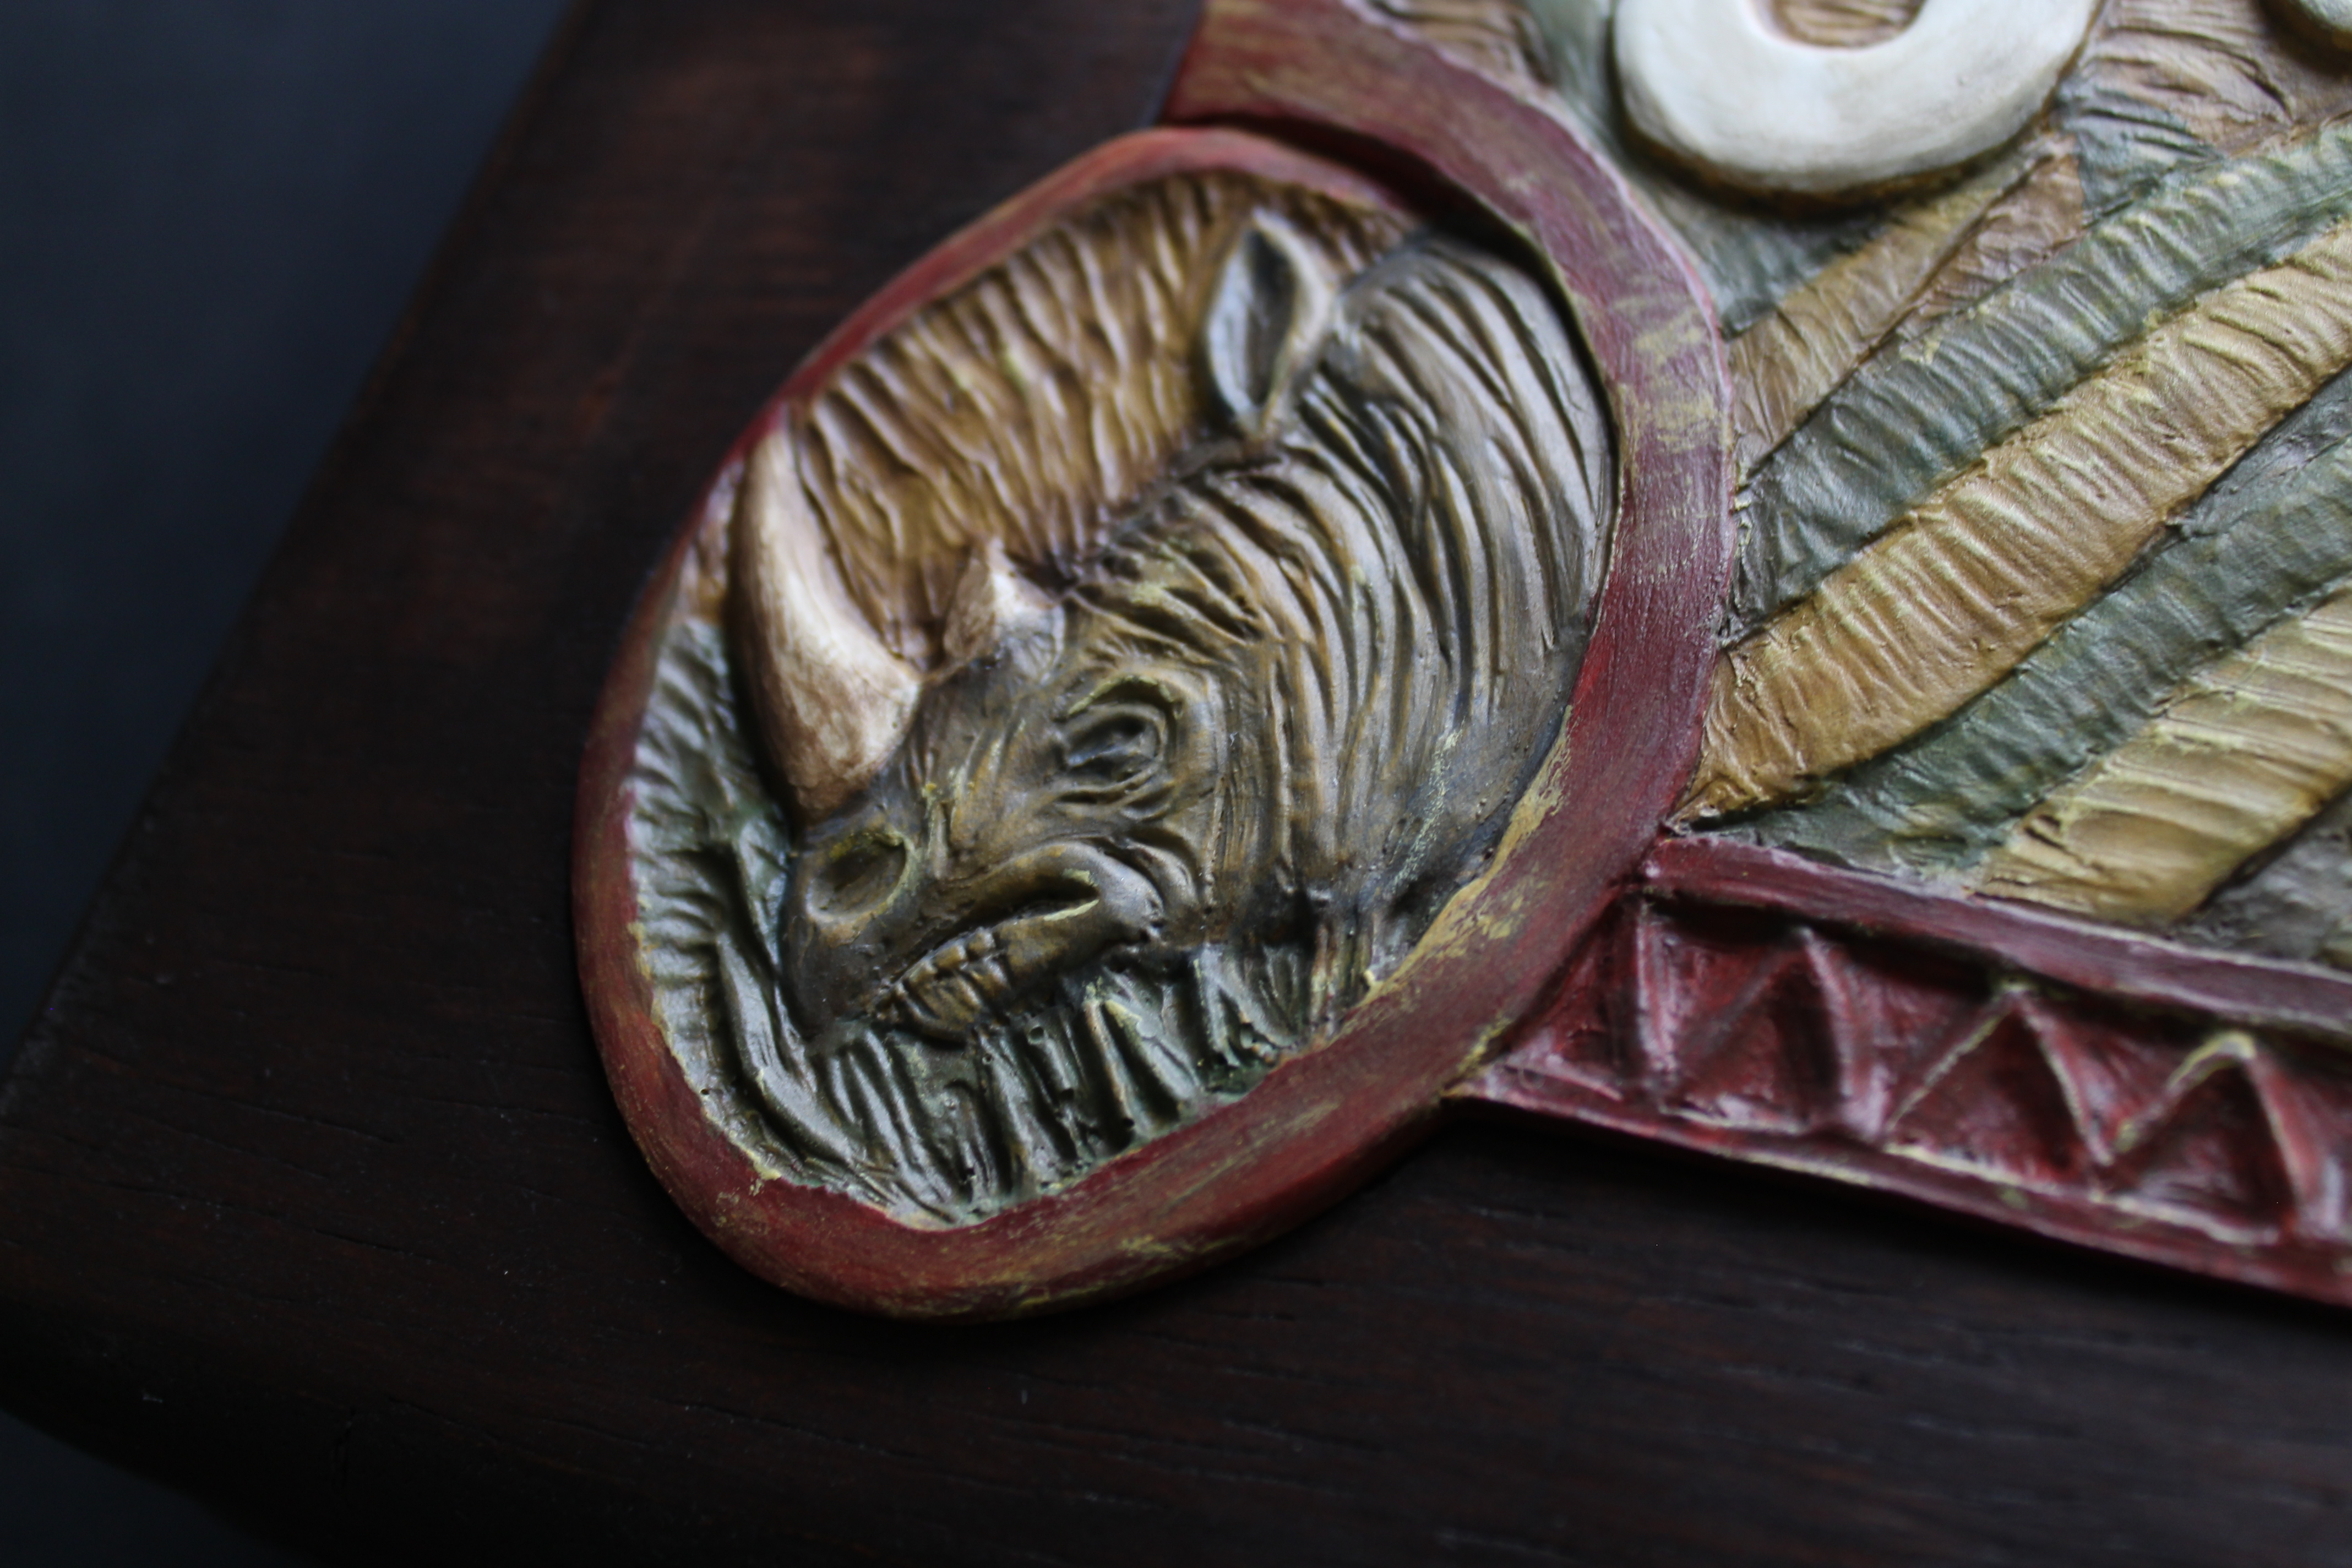 Jumanji rhino carving